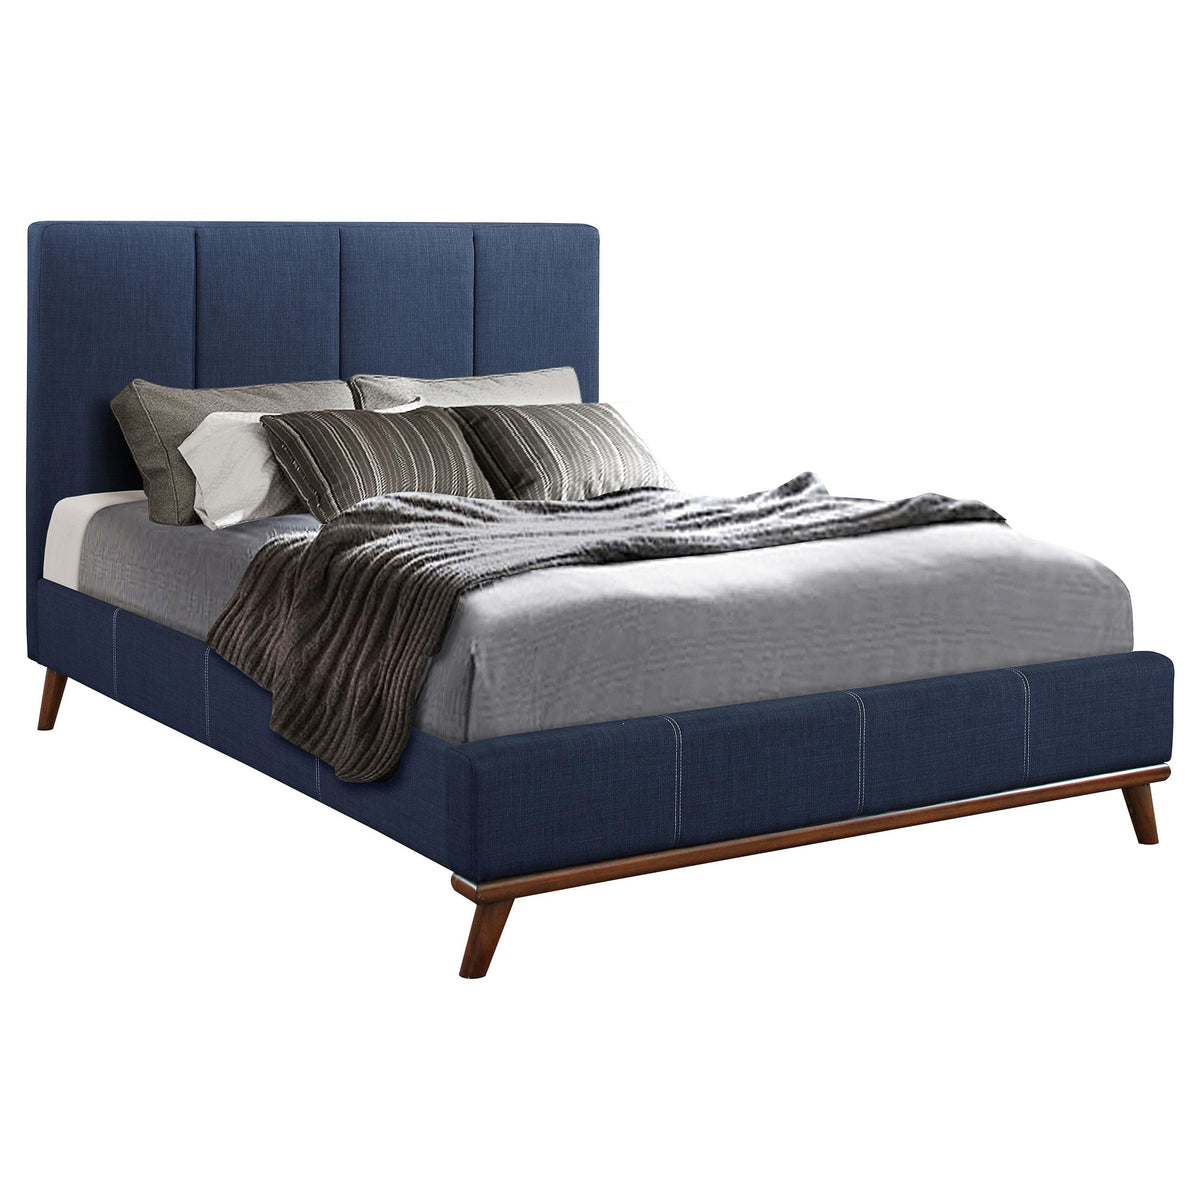 Charity Full Upholstered Bed Blue Charity Full Upholstered Bed Blue Half Price Furniture